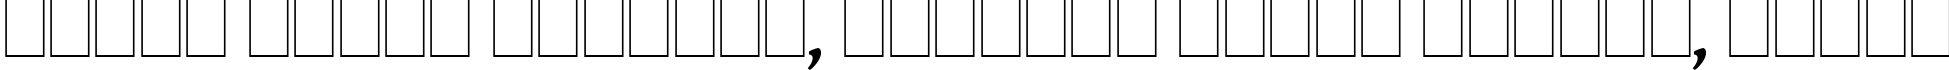 Пример написания шрифтом Gentium Book Basic Bold Italic текста на белорусском